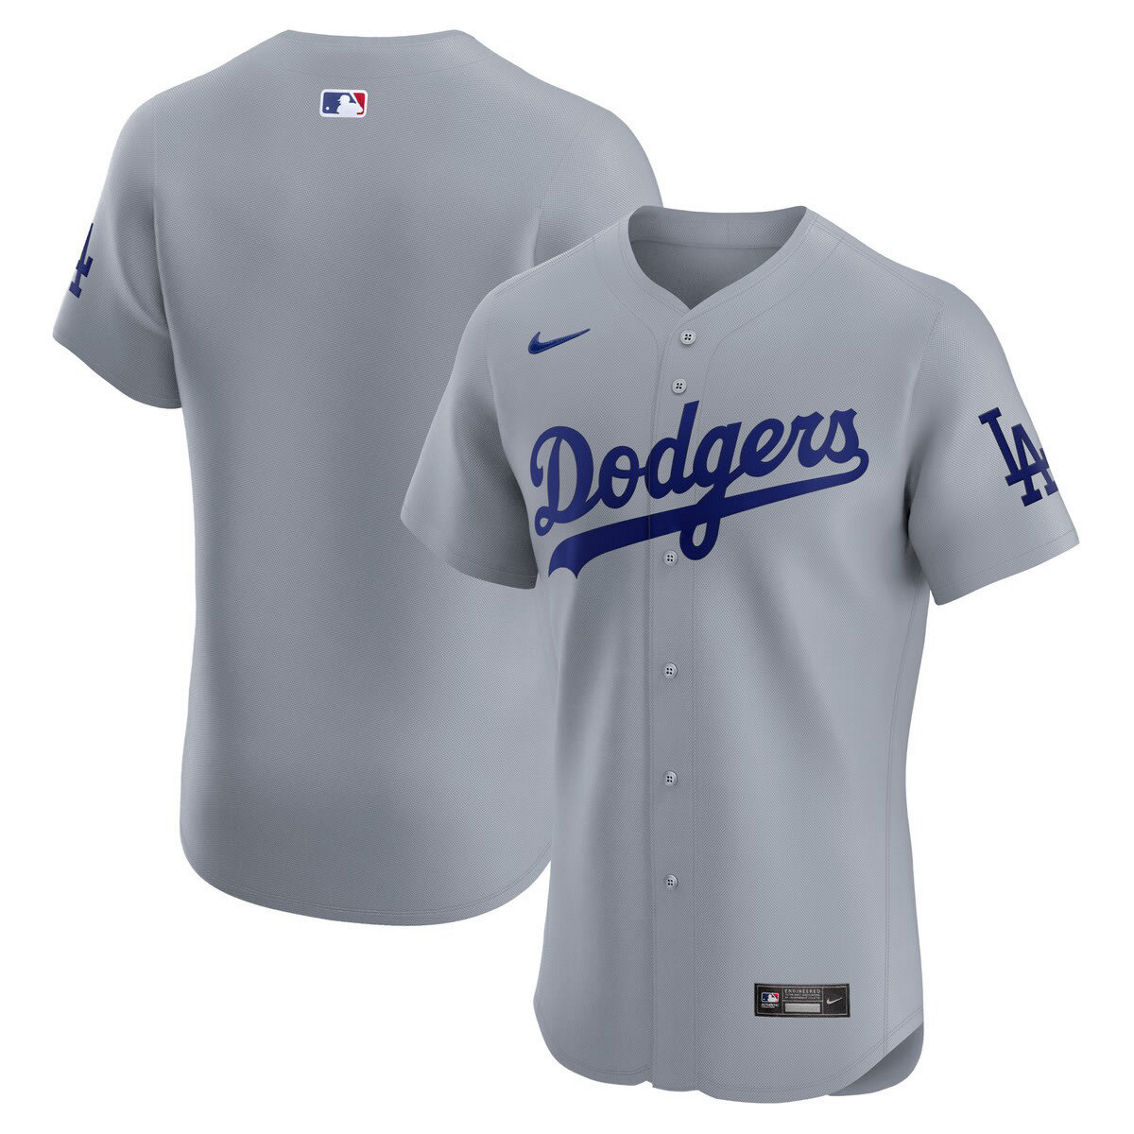 Nike Men's Gray Los Angeles Dodgers Alternate Vapor Premier Elite Patch Jersey - Image 2 of 4